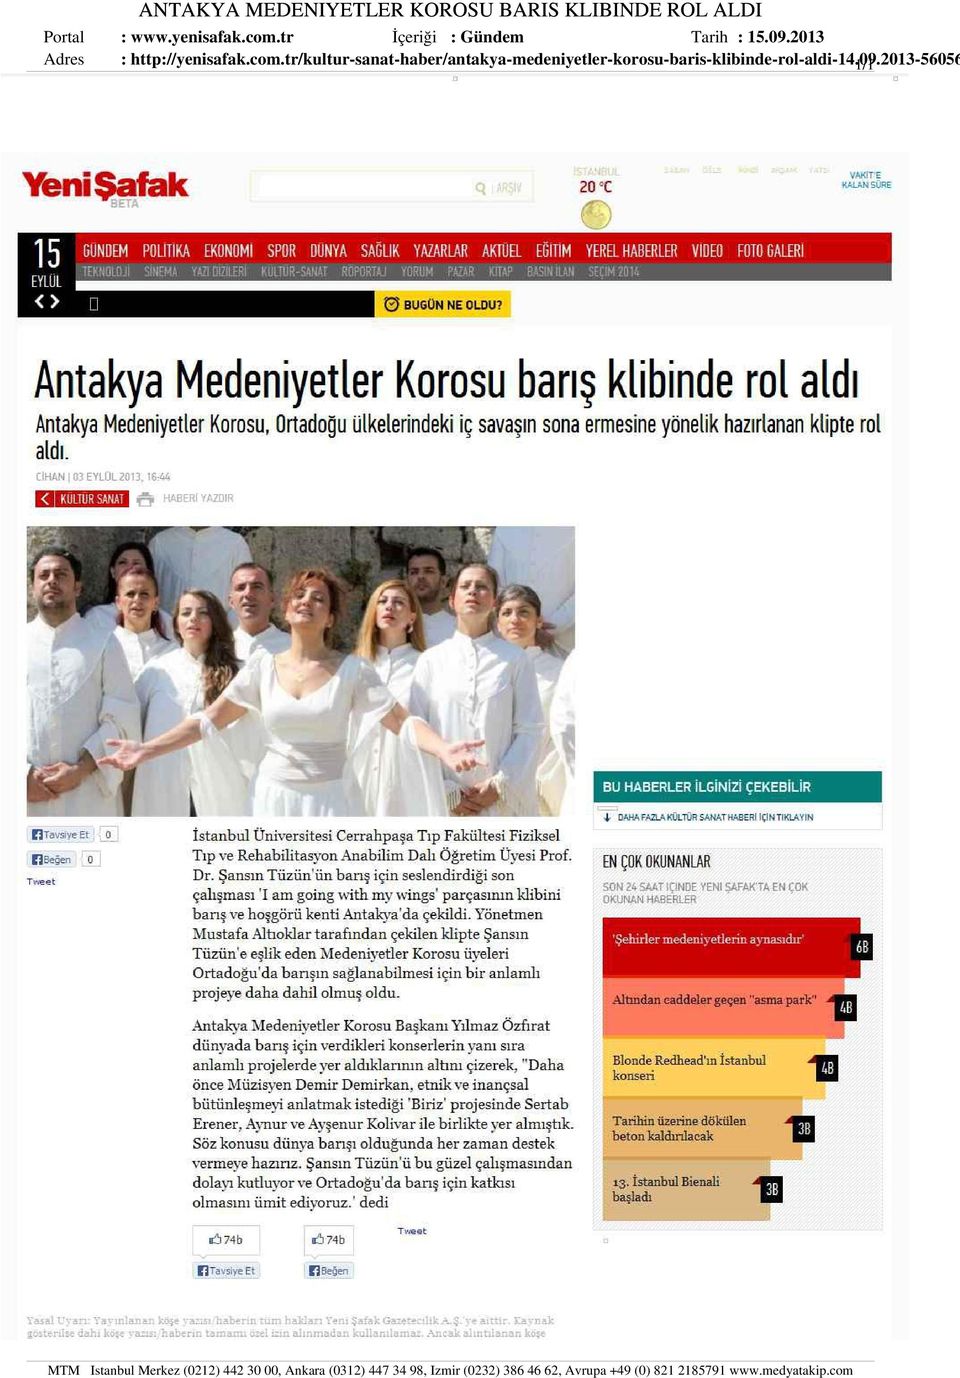 2013 : http://yenisafak.com.